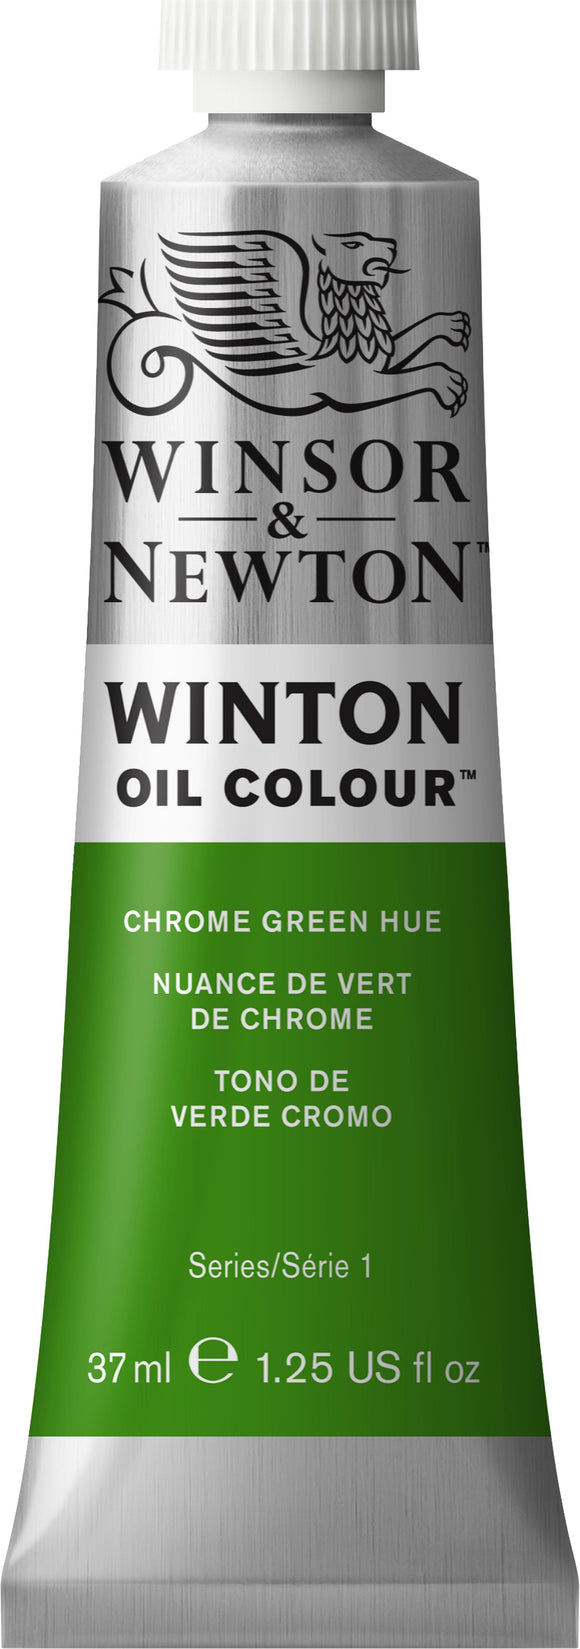 Winsor & Newton Winton Oil Colour Chrome Green Hue 37Ml